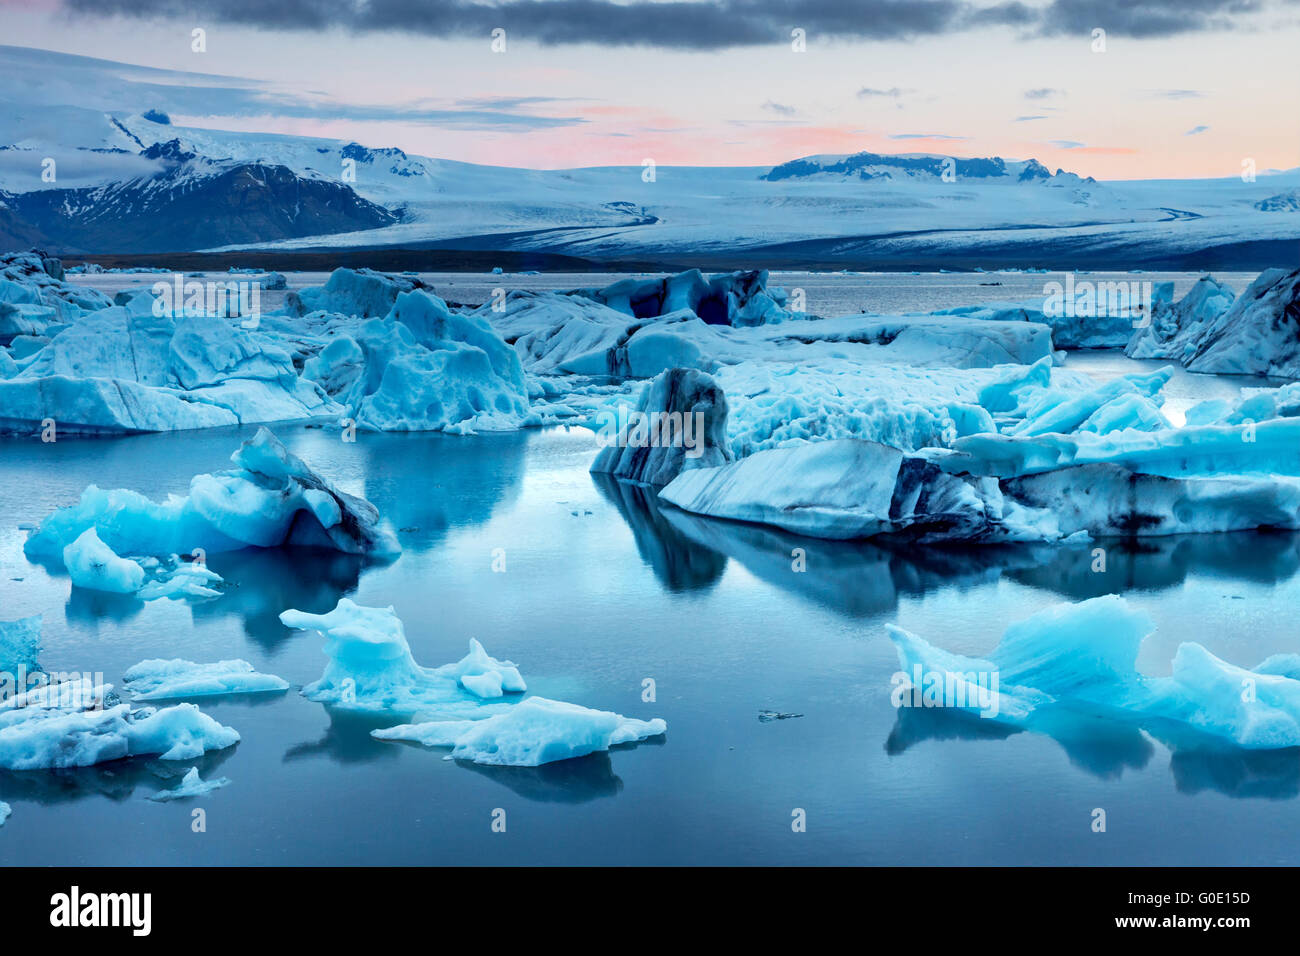 The Jokulsarlon glacier lagoon in Iceland during a Stock Photo